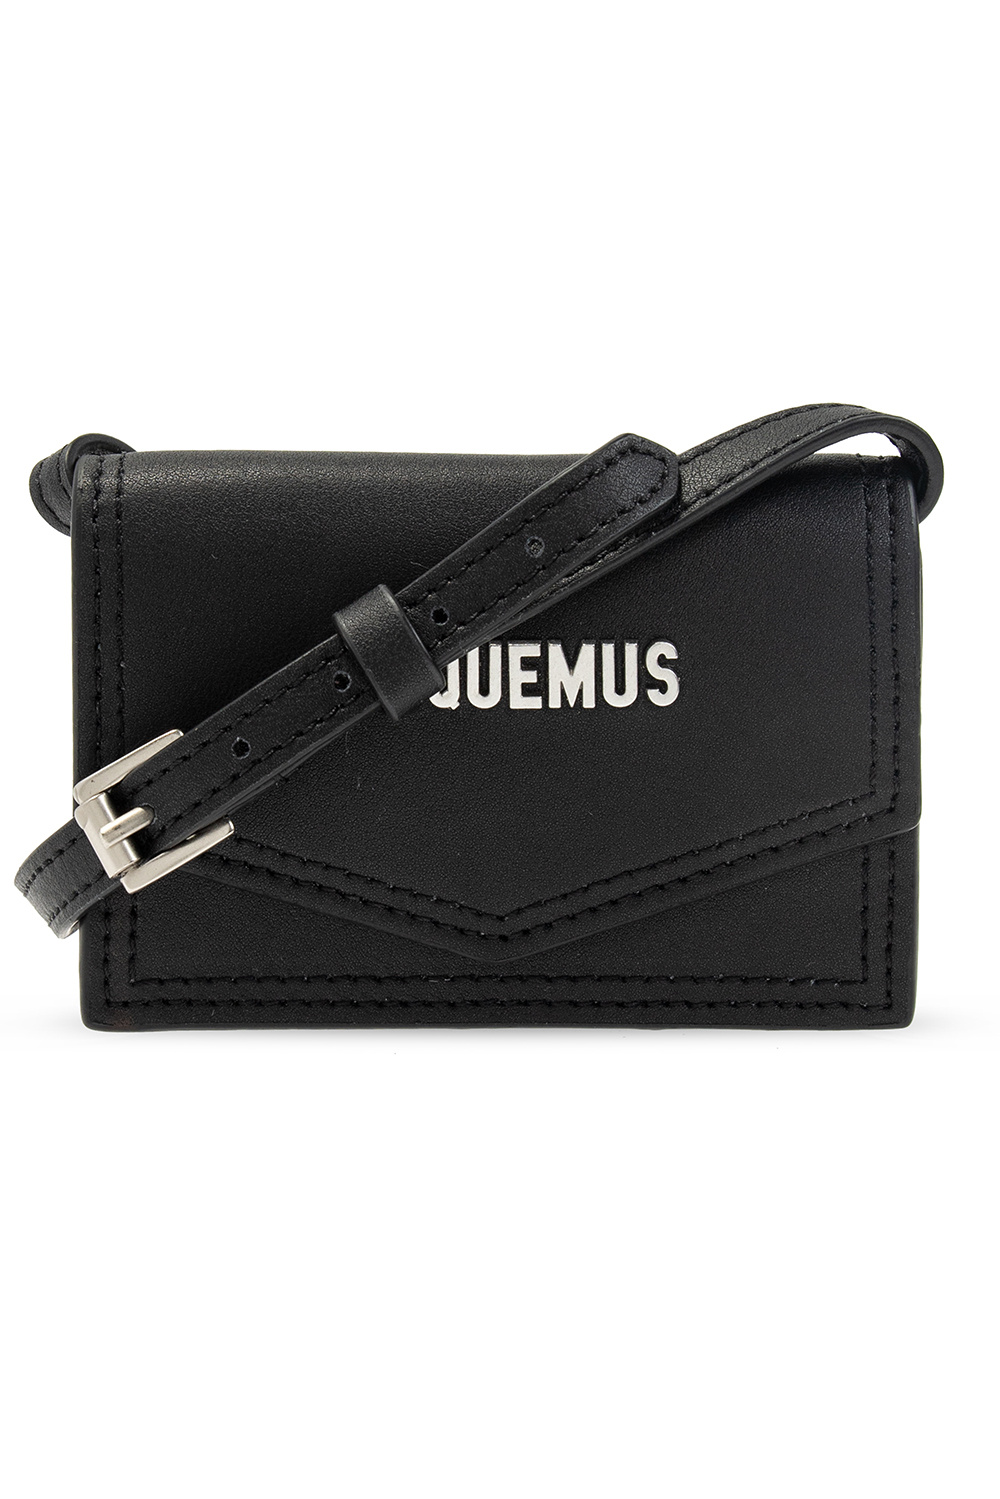 Jacquemus Le Porte Azur Card Holder in Black for Men